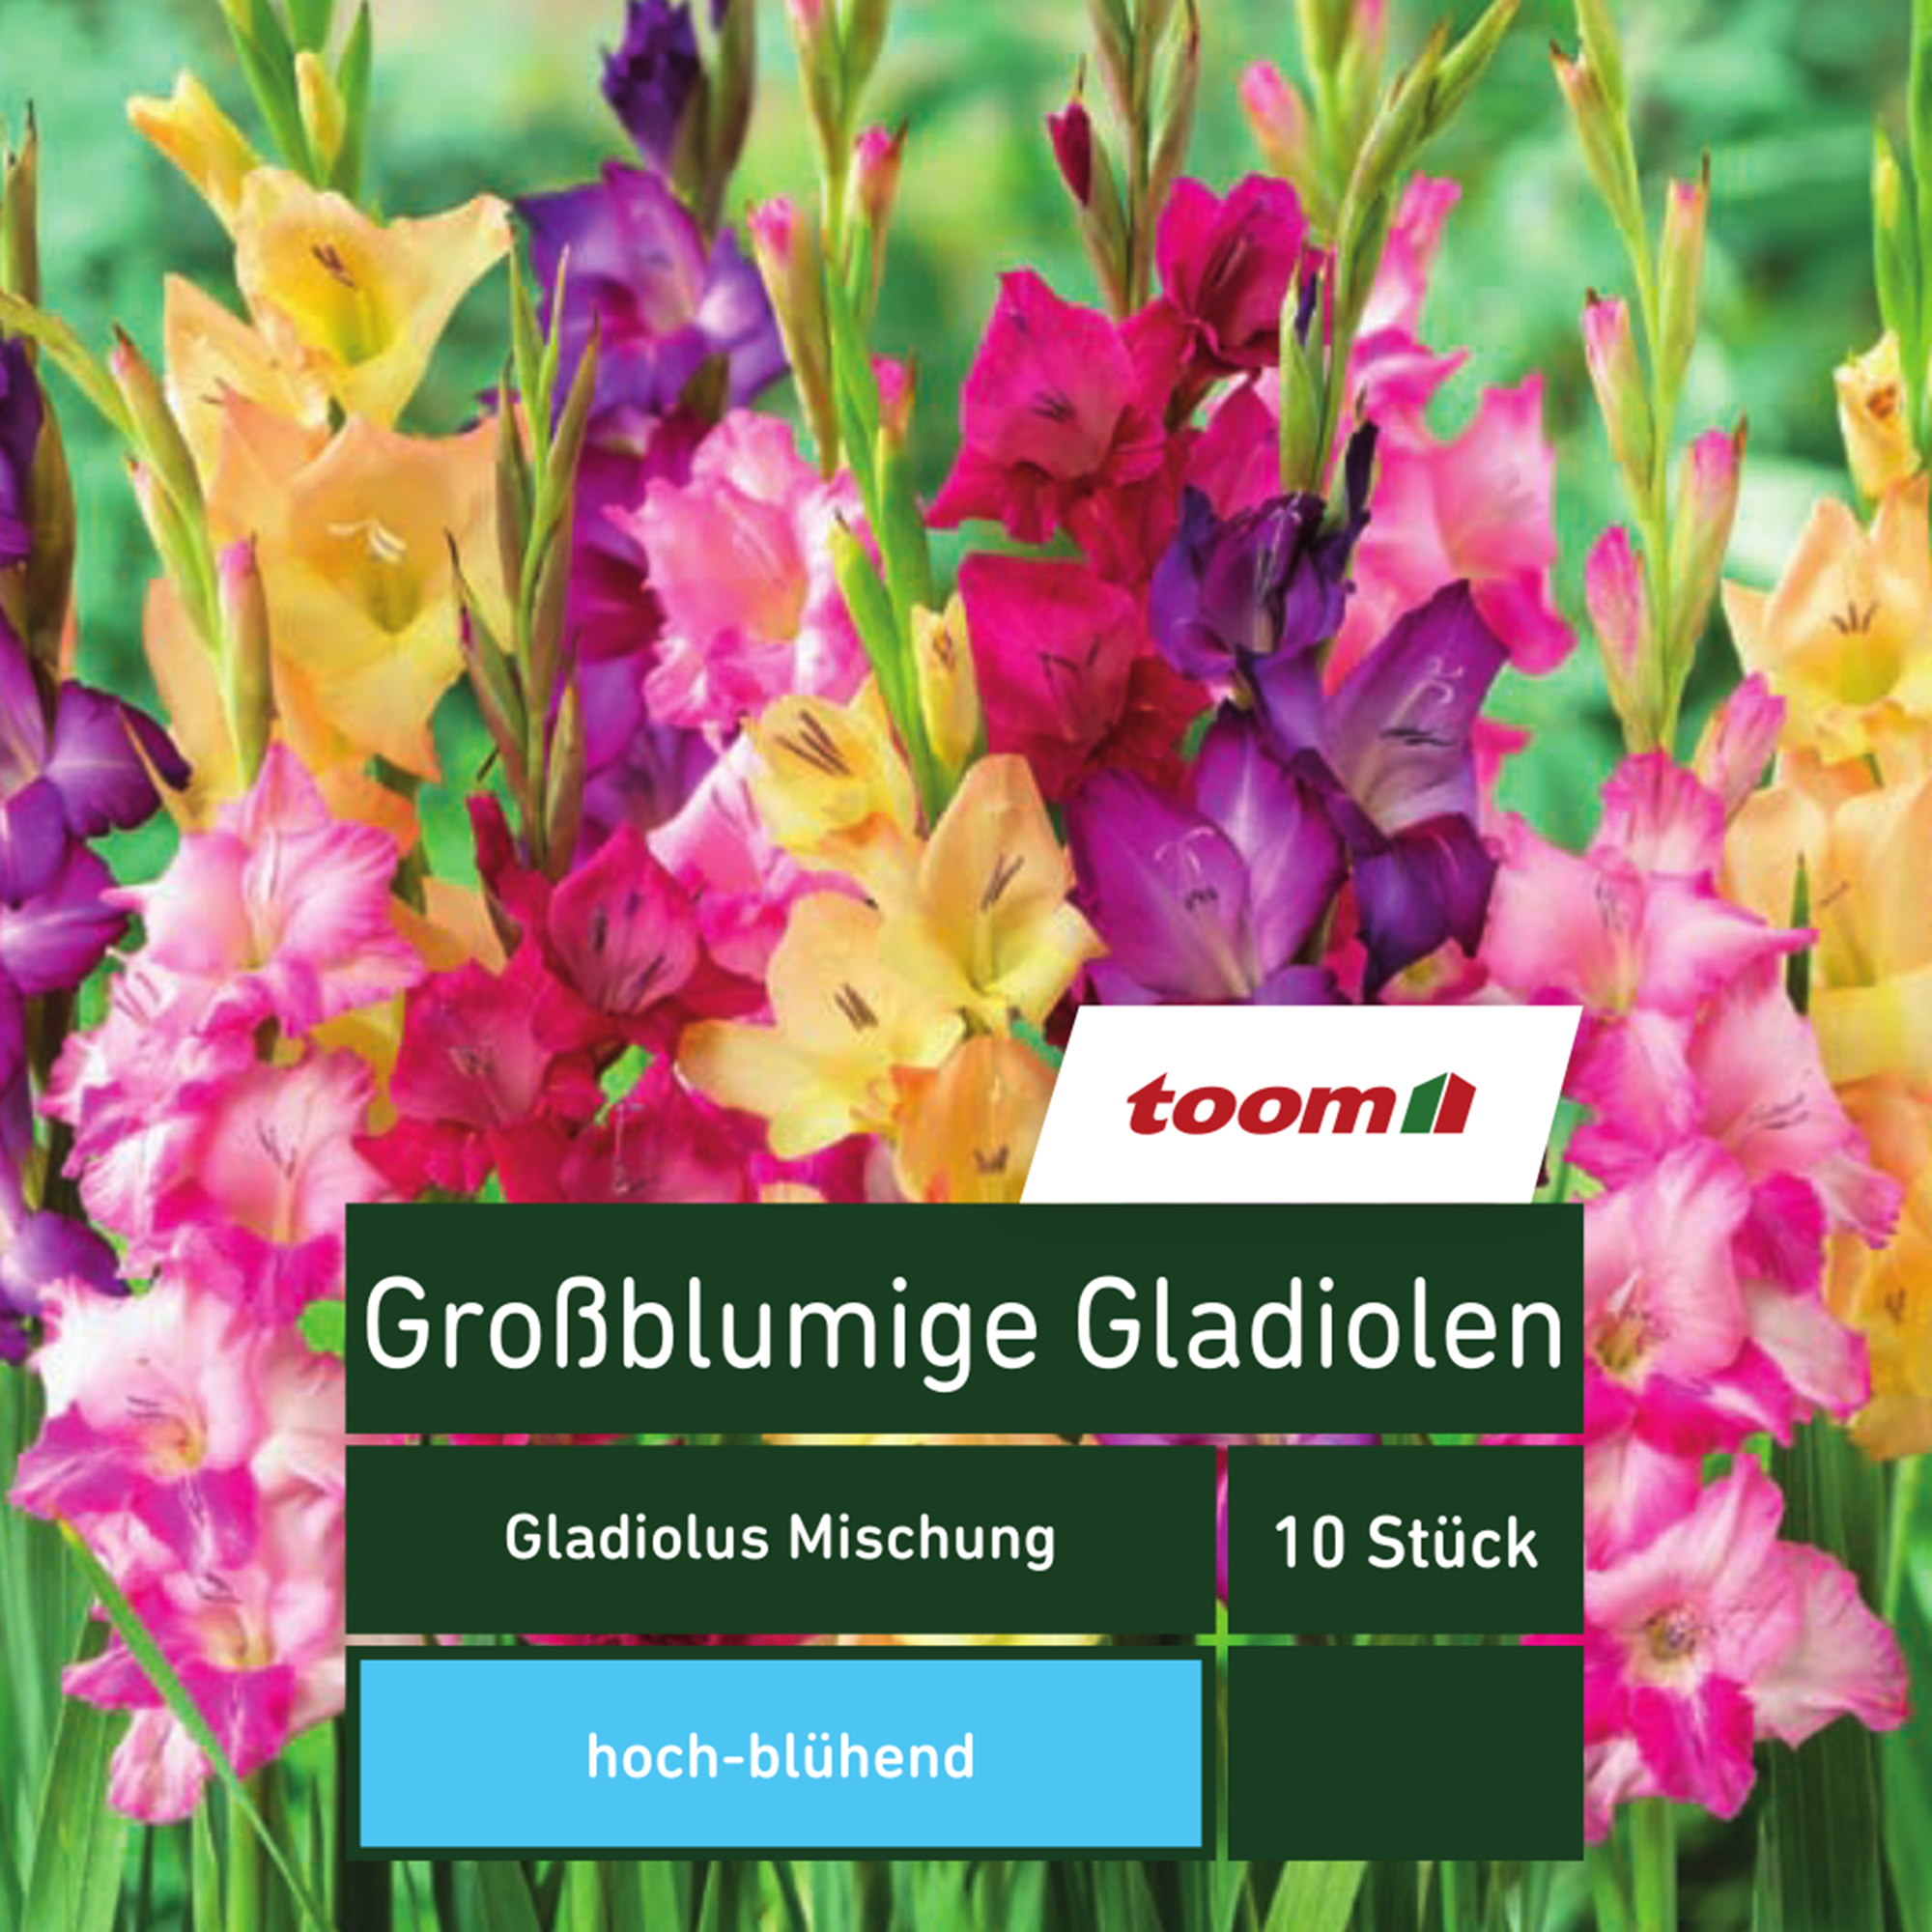 Großblumige Gladiolen 'Gladiolus Mischung', 10 Stück, mehrfarbig + product picture